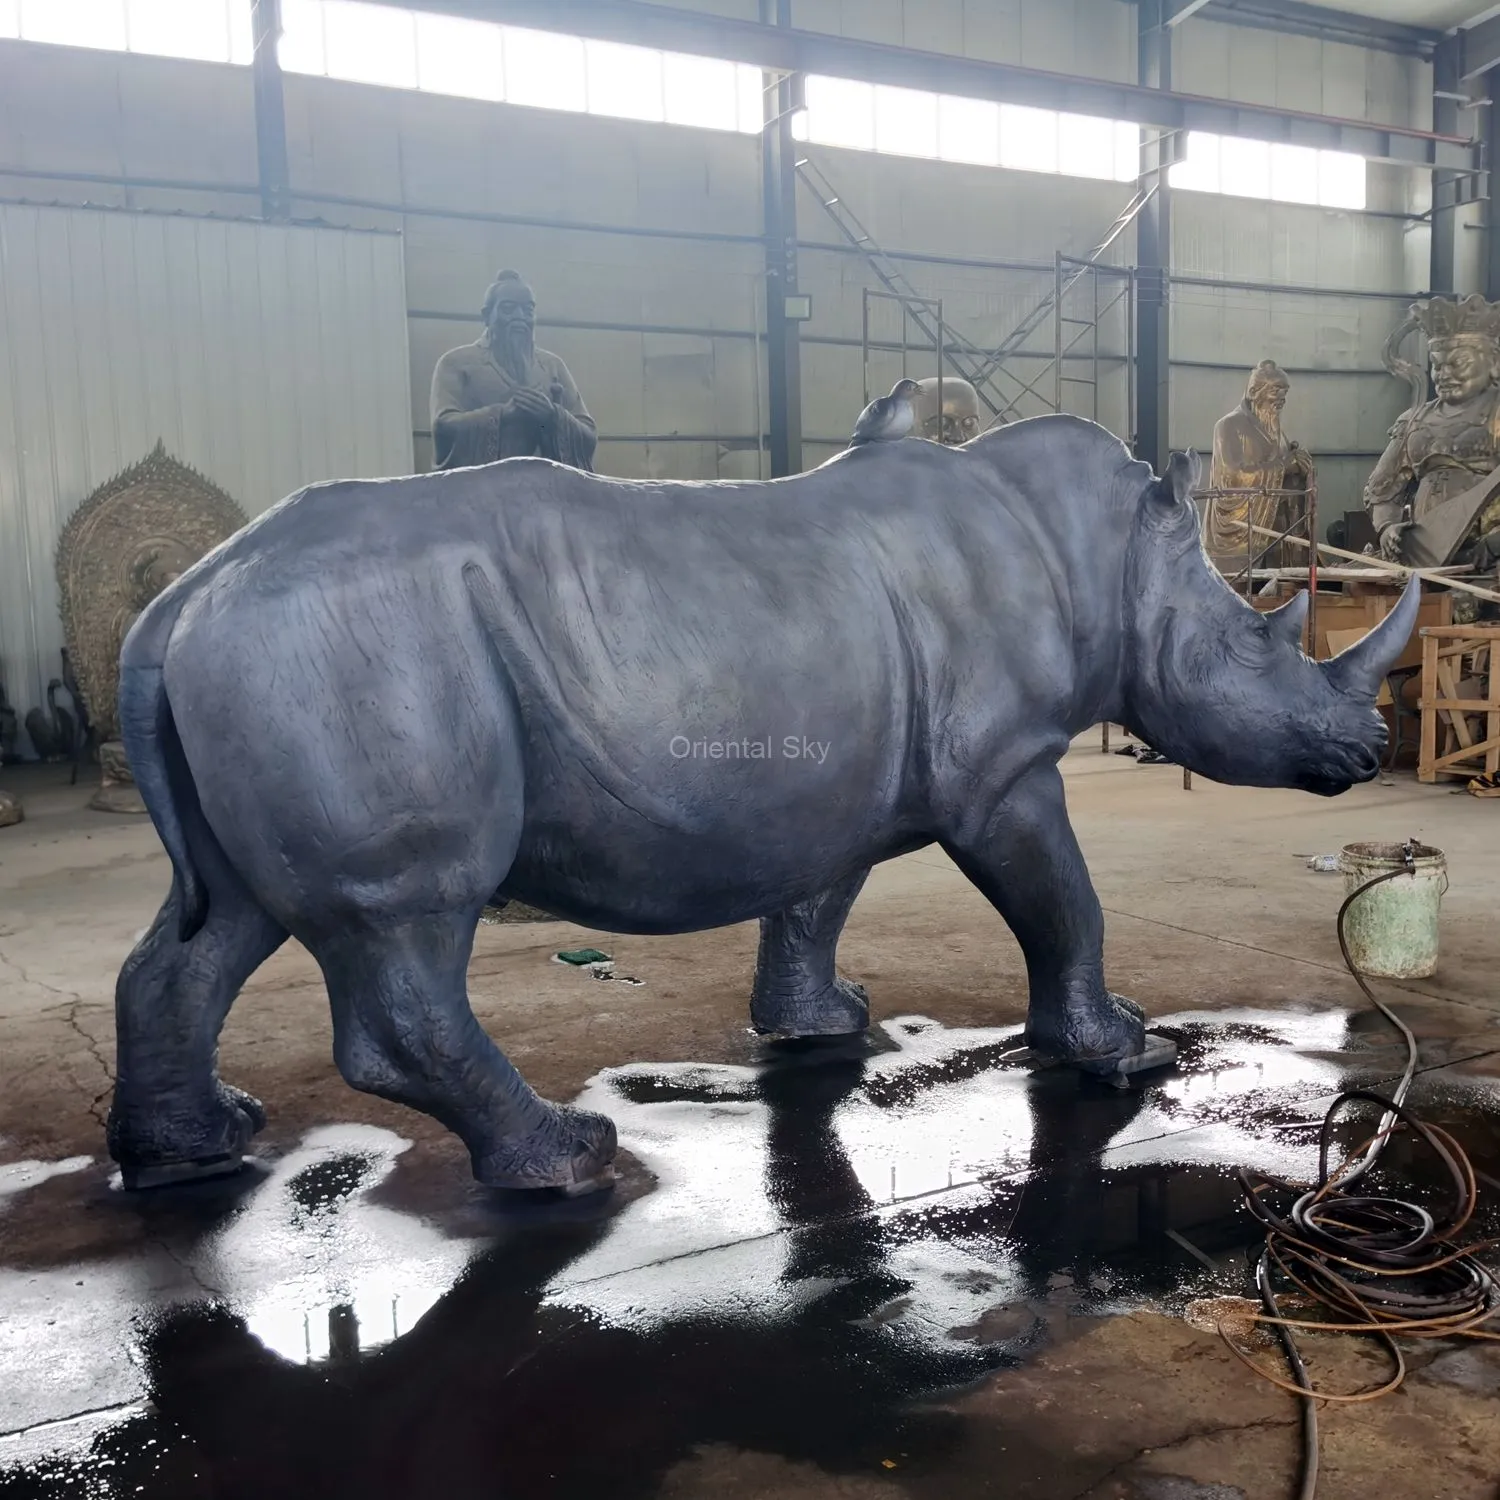 Statue en bronze grandeur nature extérieure de rhinocéros grande sculpture animale en jardin en métal